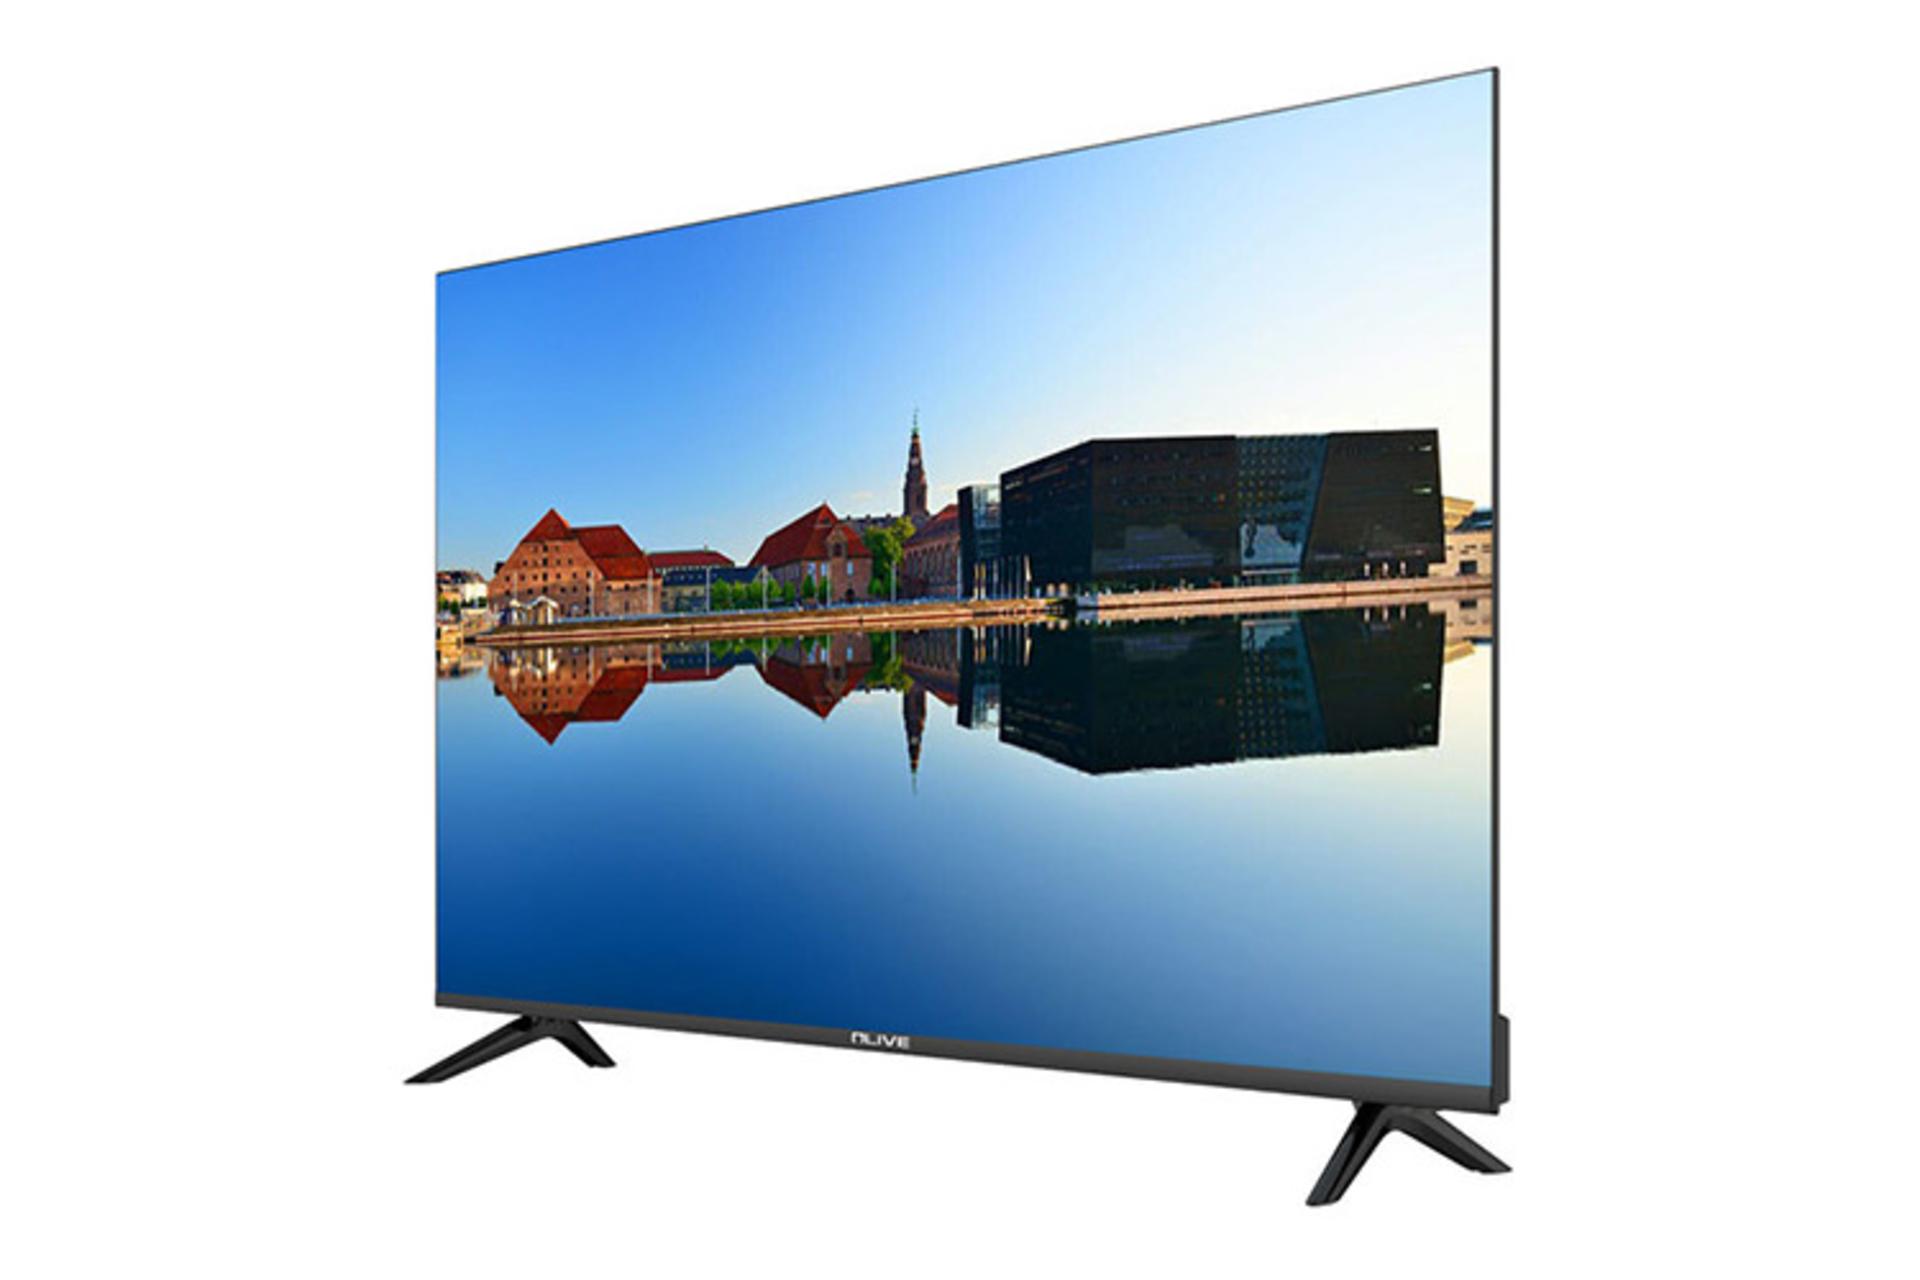 قیمت تلویزیون الیو UB8730 مدل 55 اینچ + مشخصات